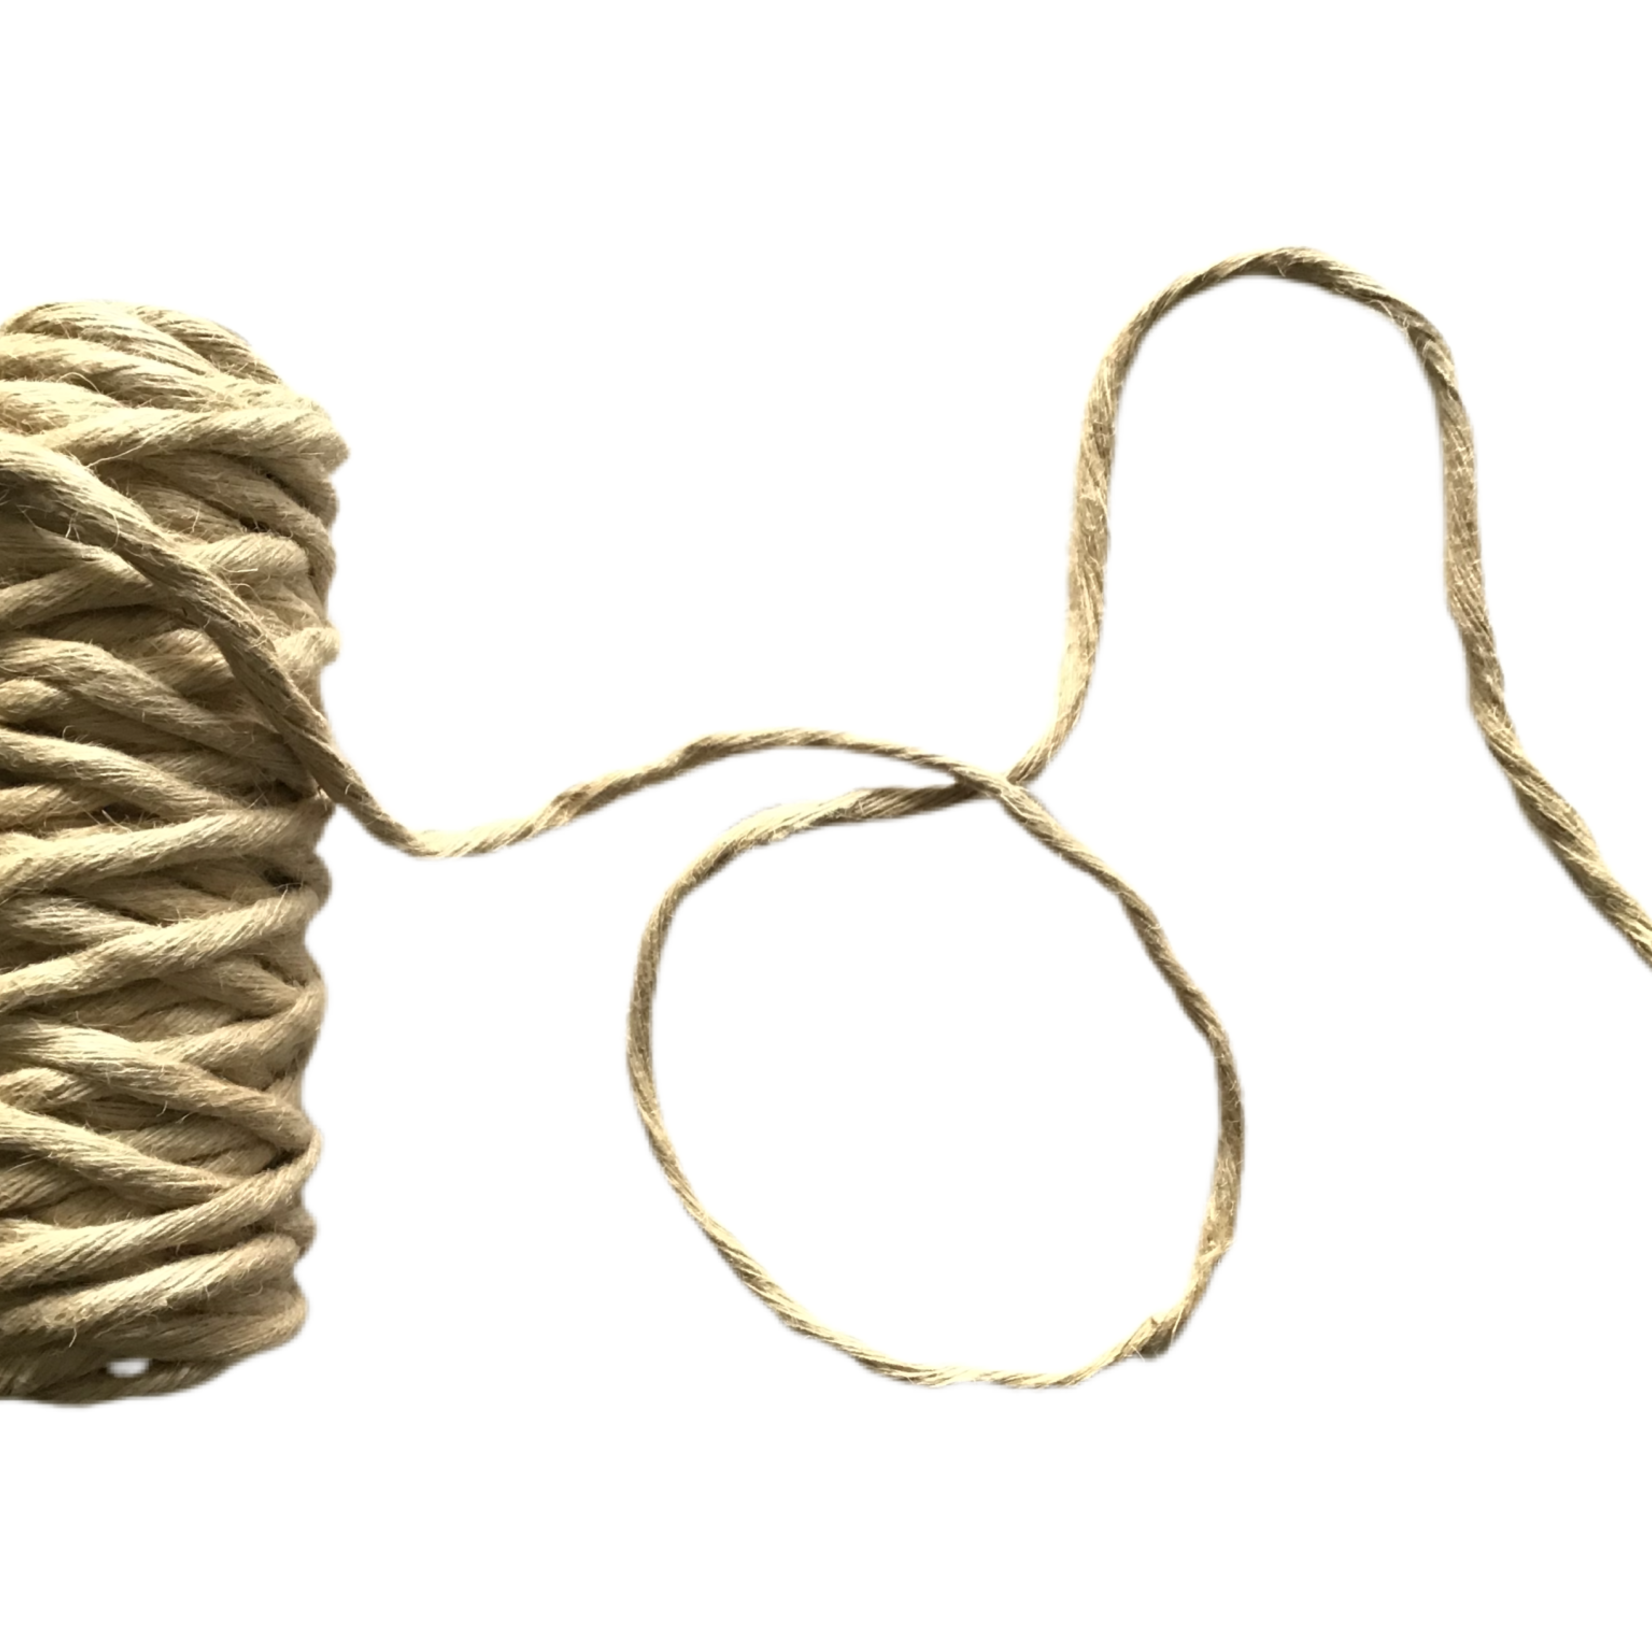 NLS Jute rope (1m)